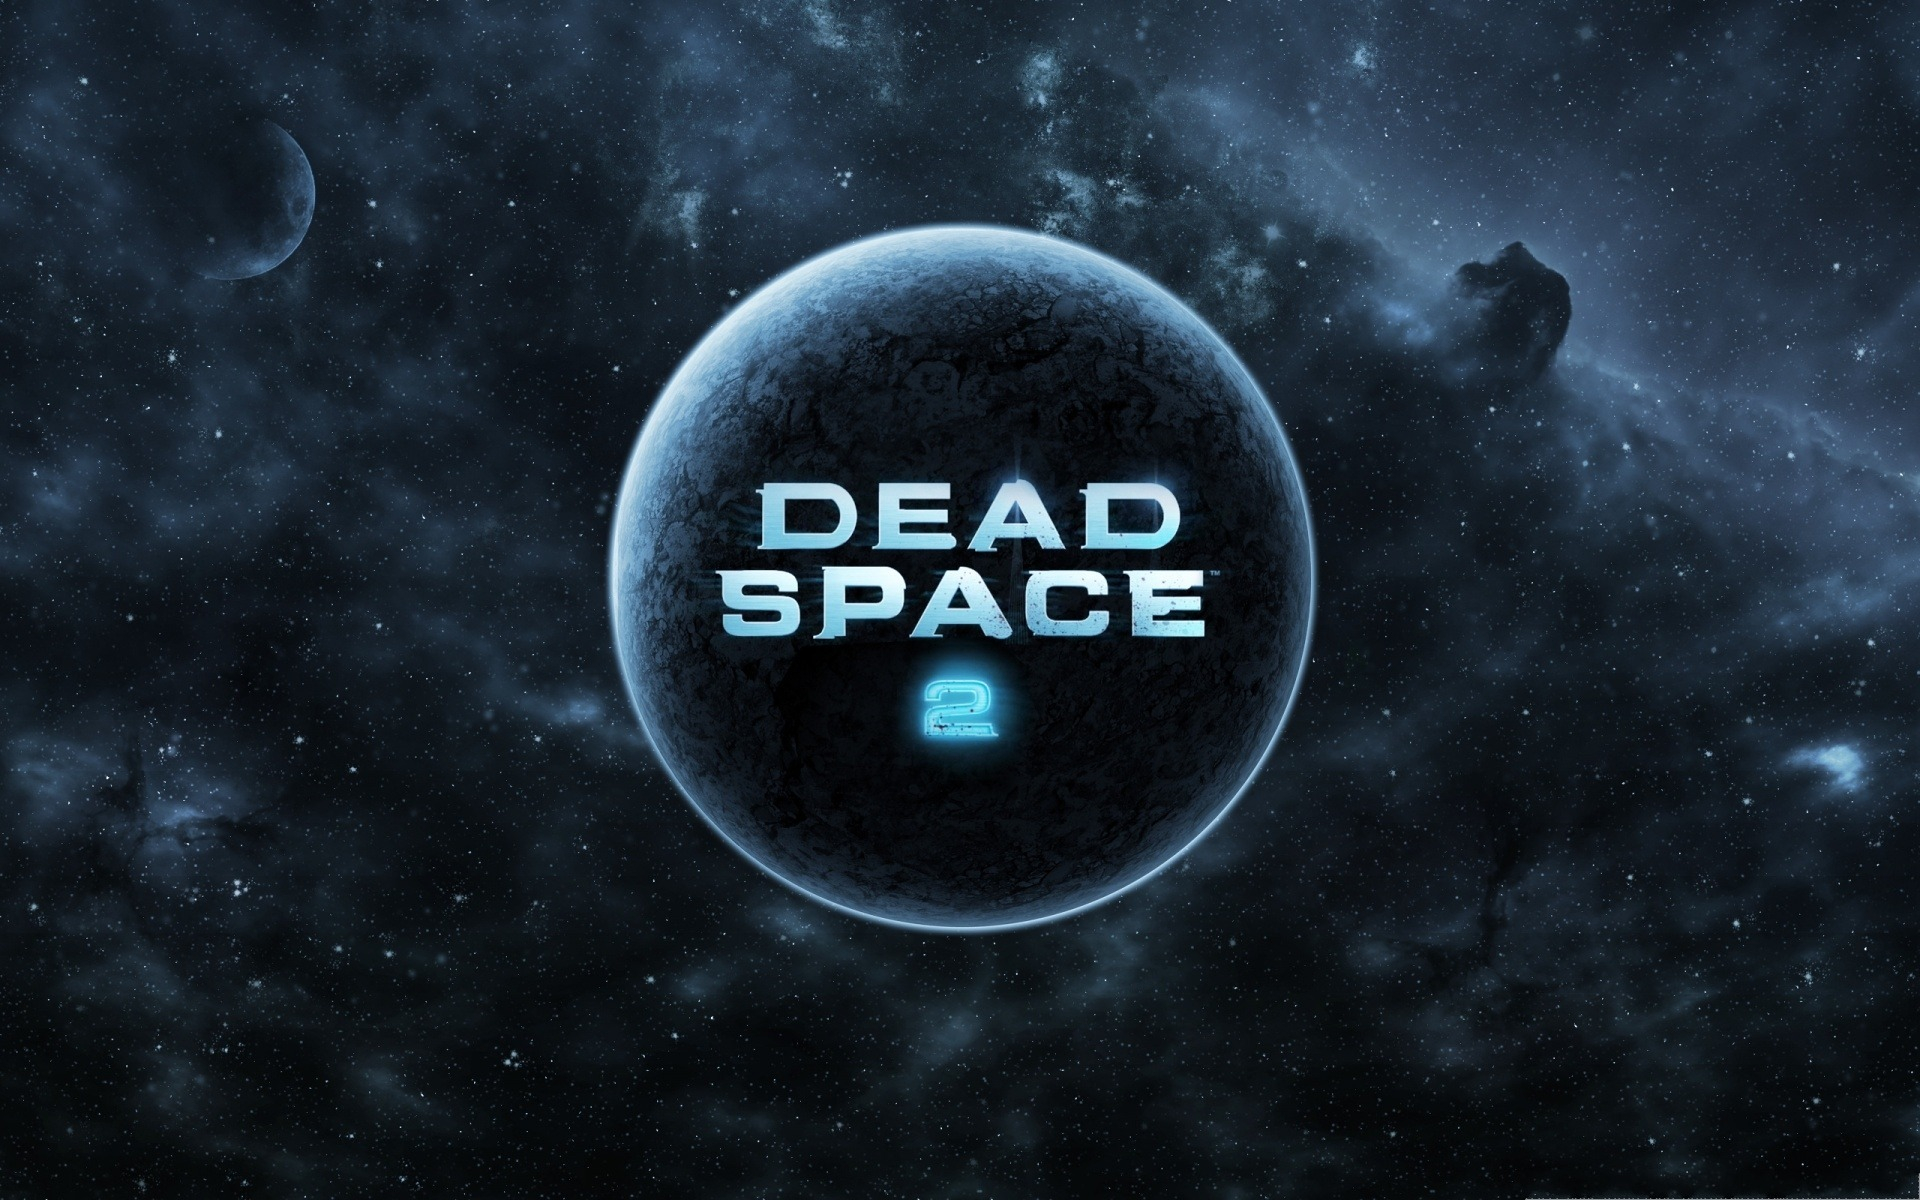 Second space. Обои на рабочий стол дед Спейс 2. Игра Space. Dead Space Планета.